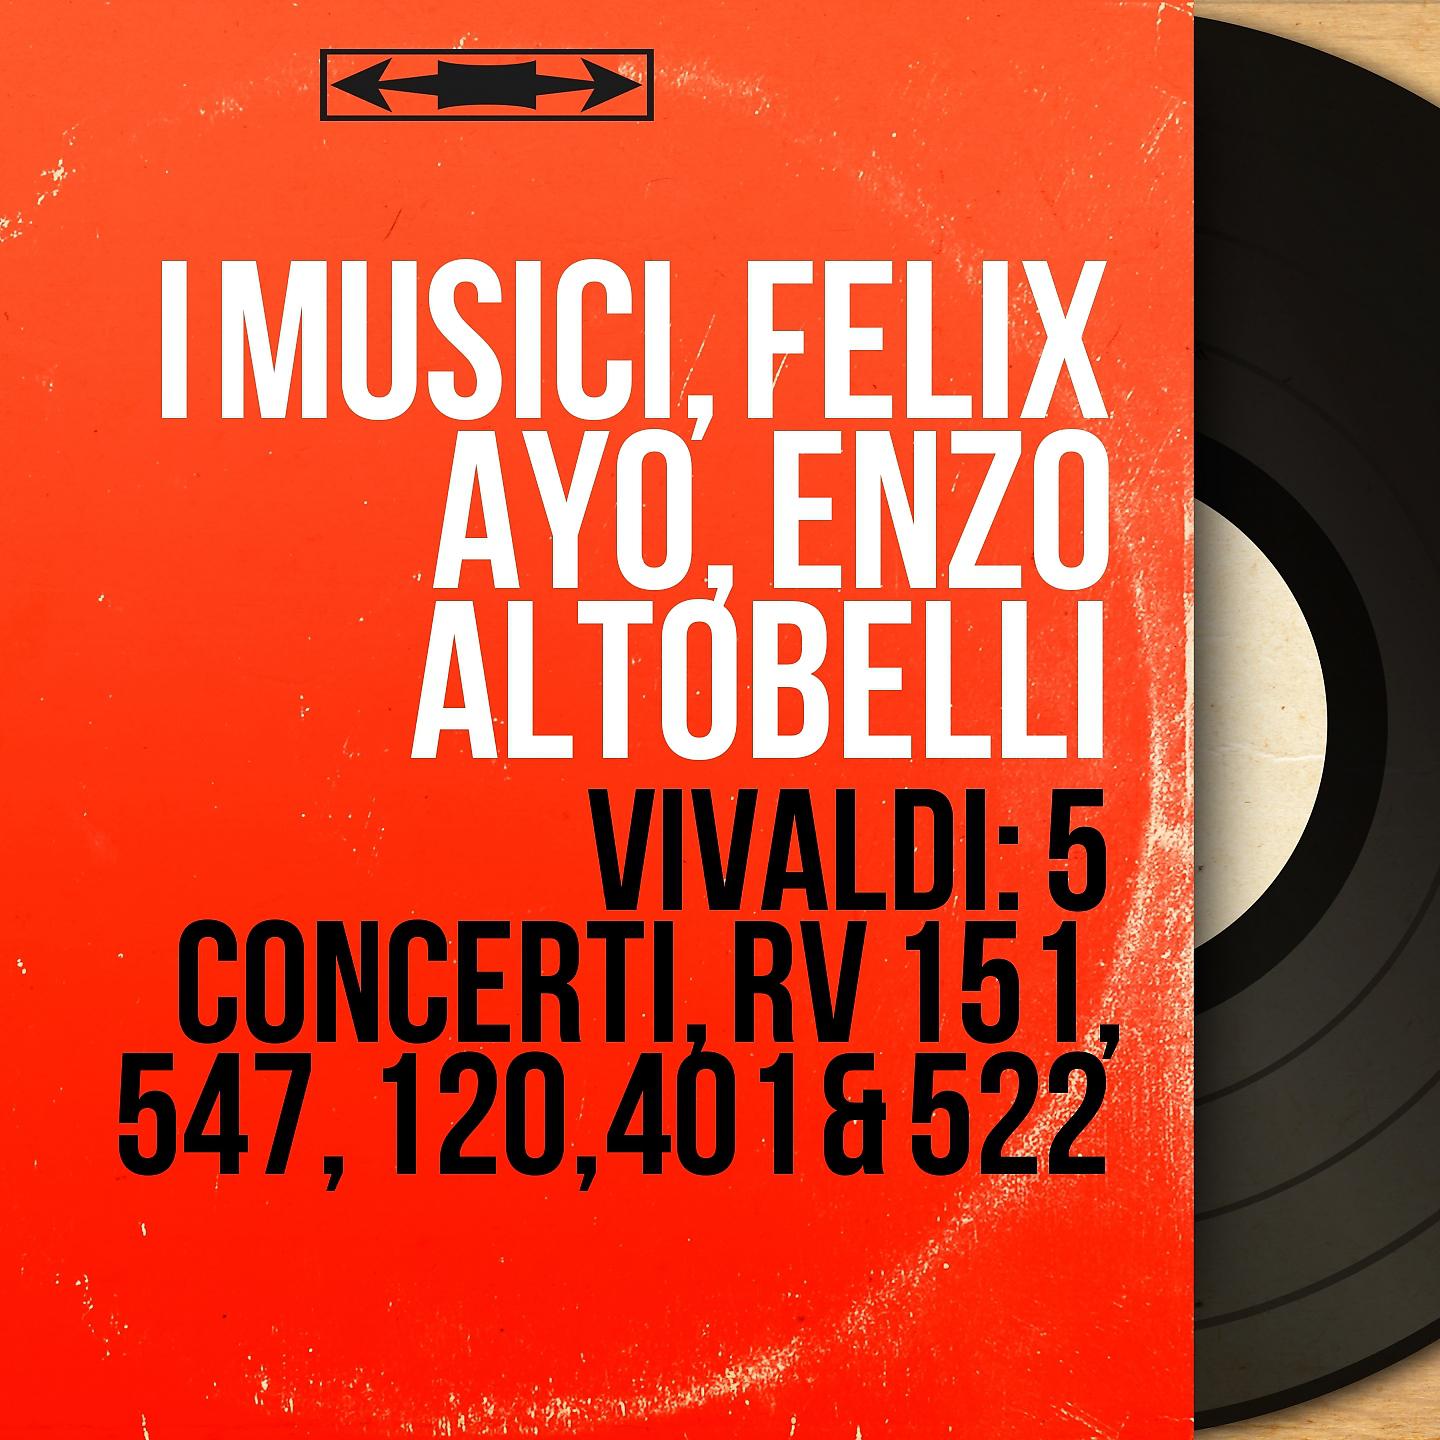 Постер альбома Vivaldi: 5 Concerti, RV 151, 547, 120, 401 & 522